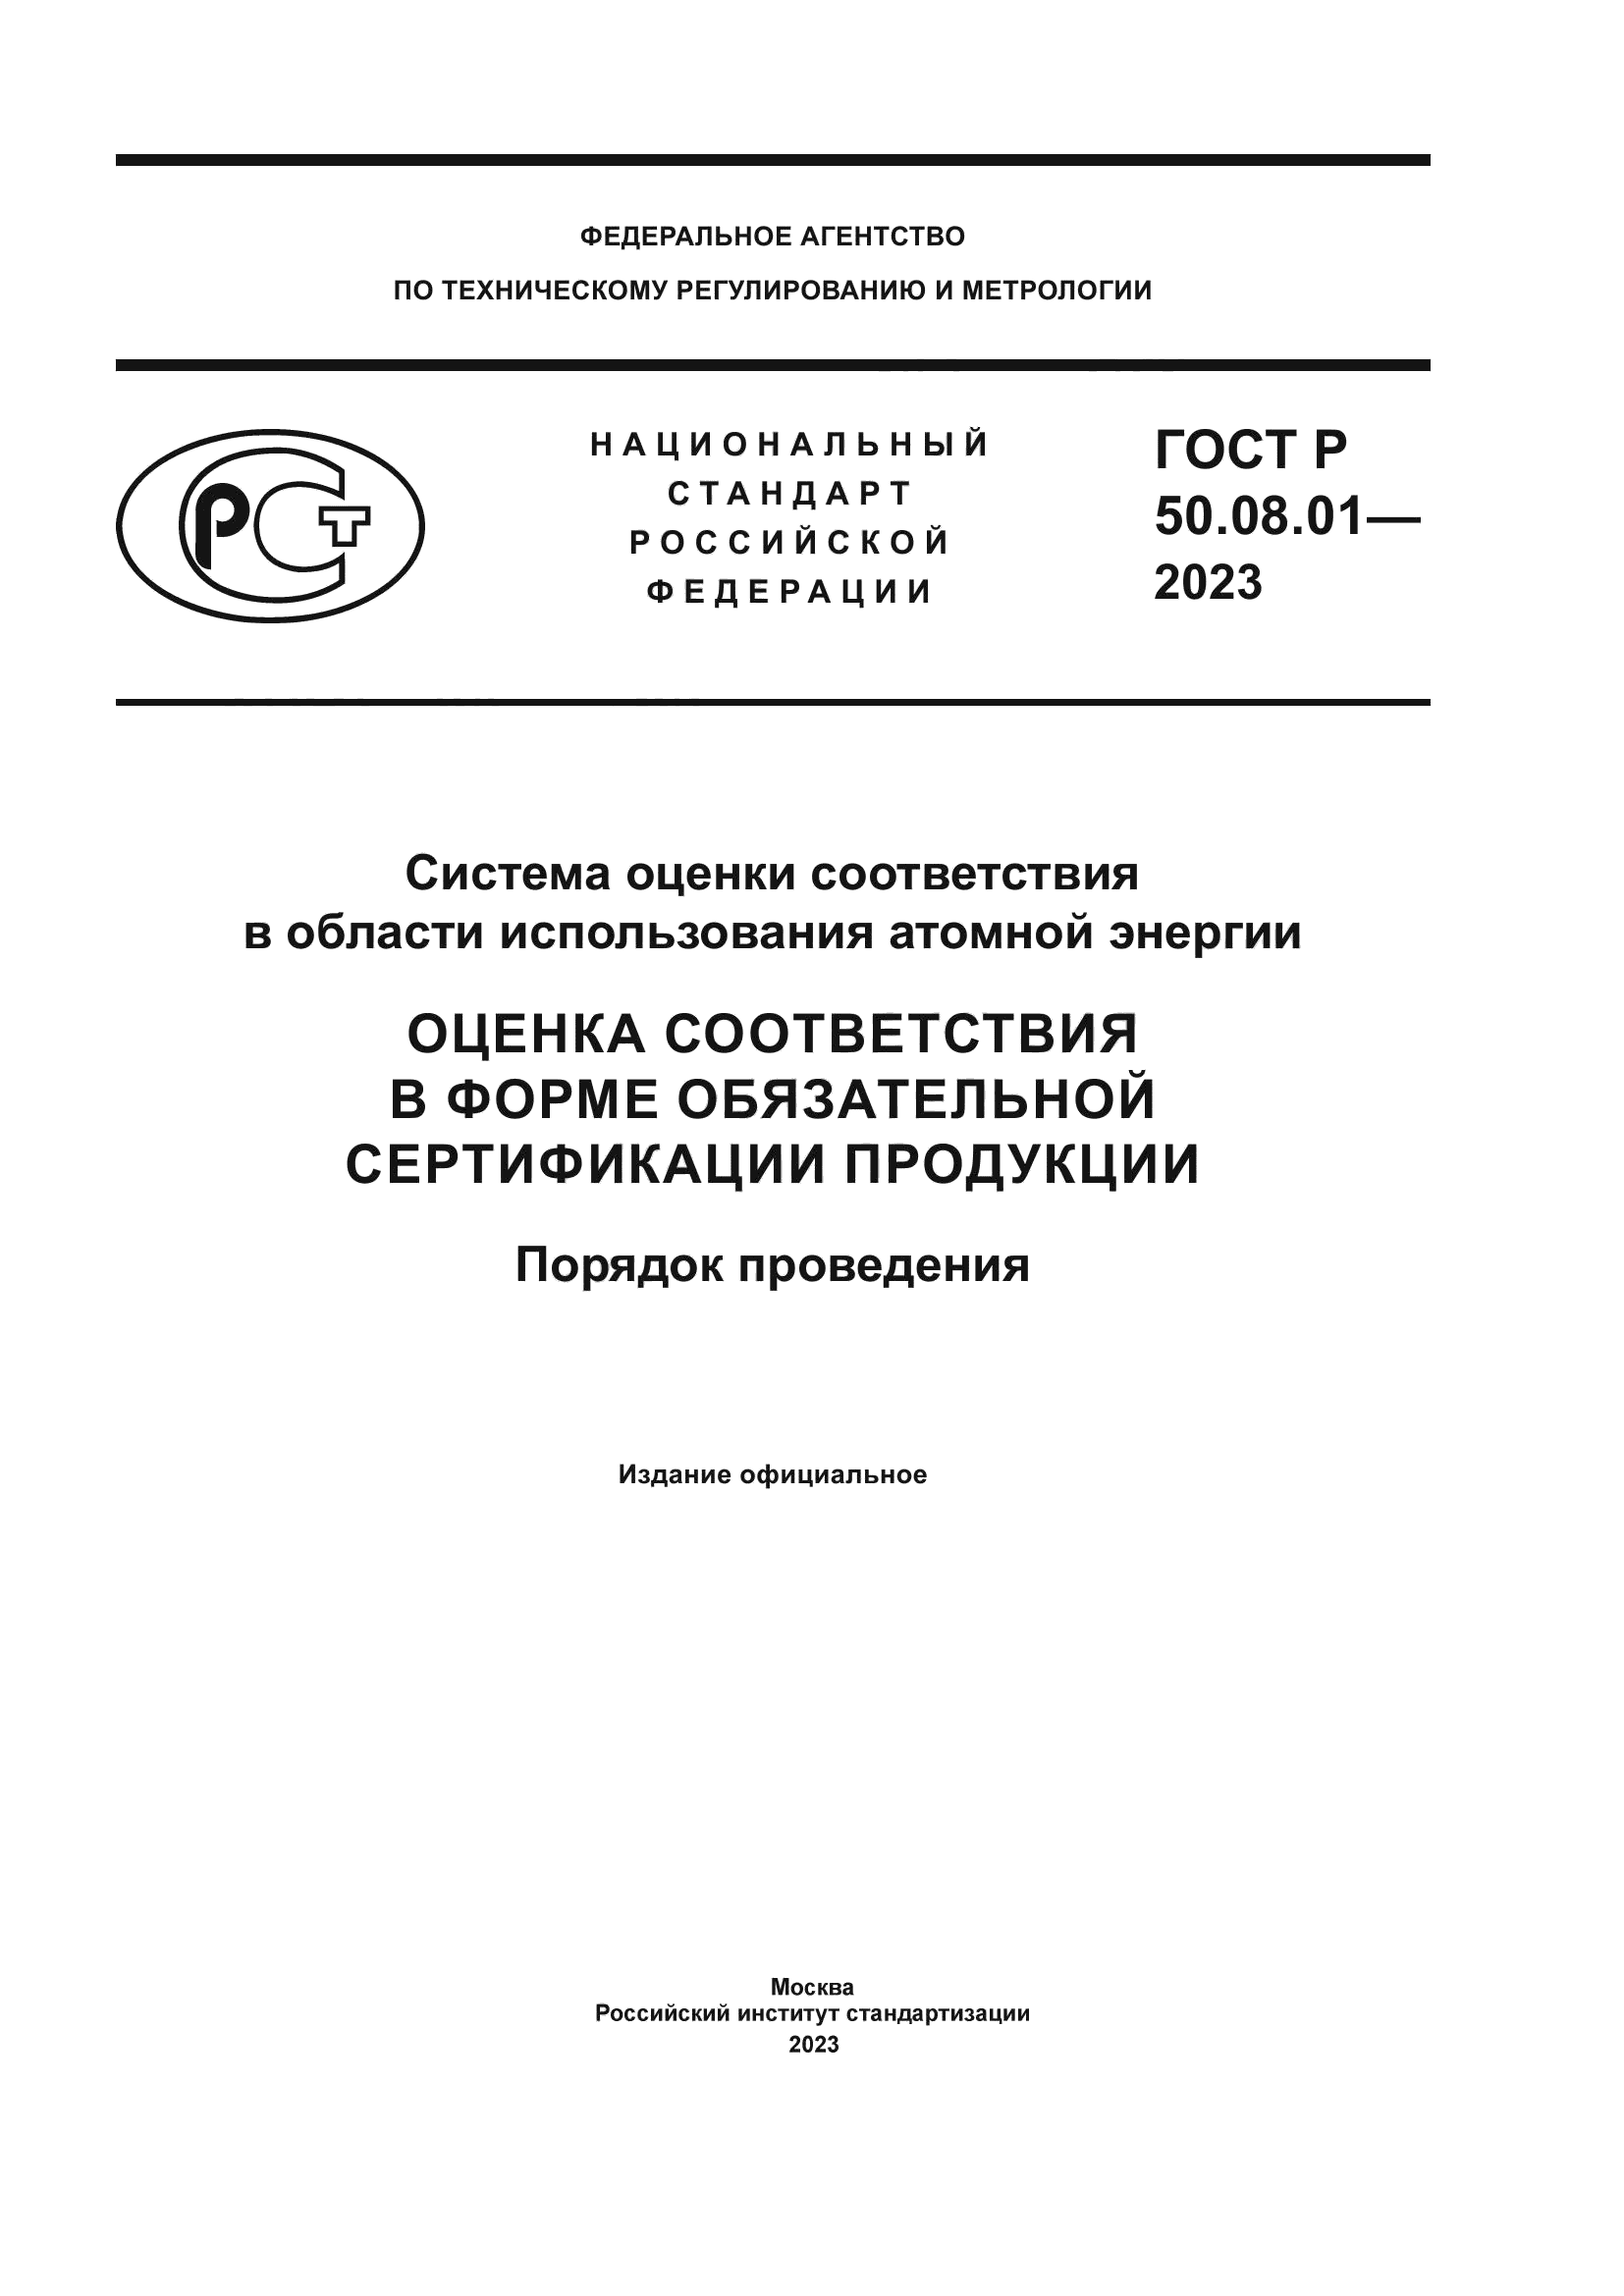 ГОСТ Р 50.08.01-2023